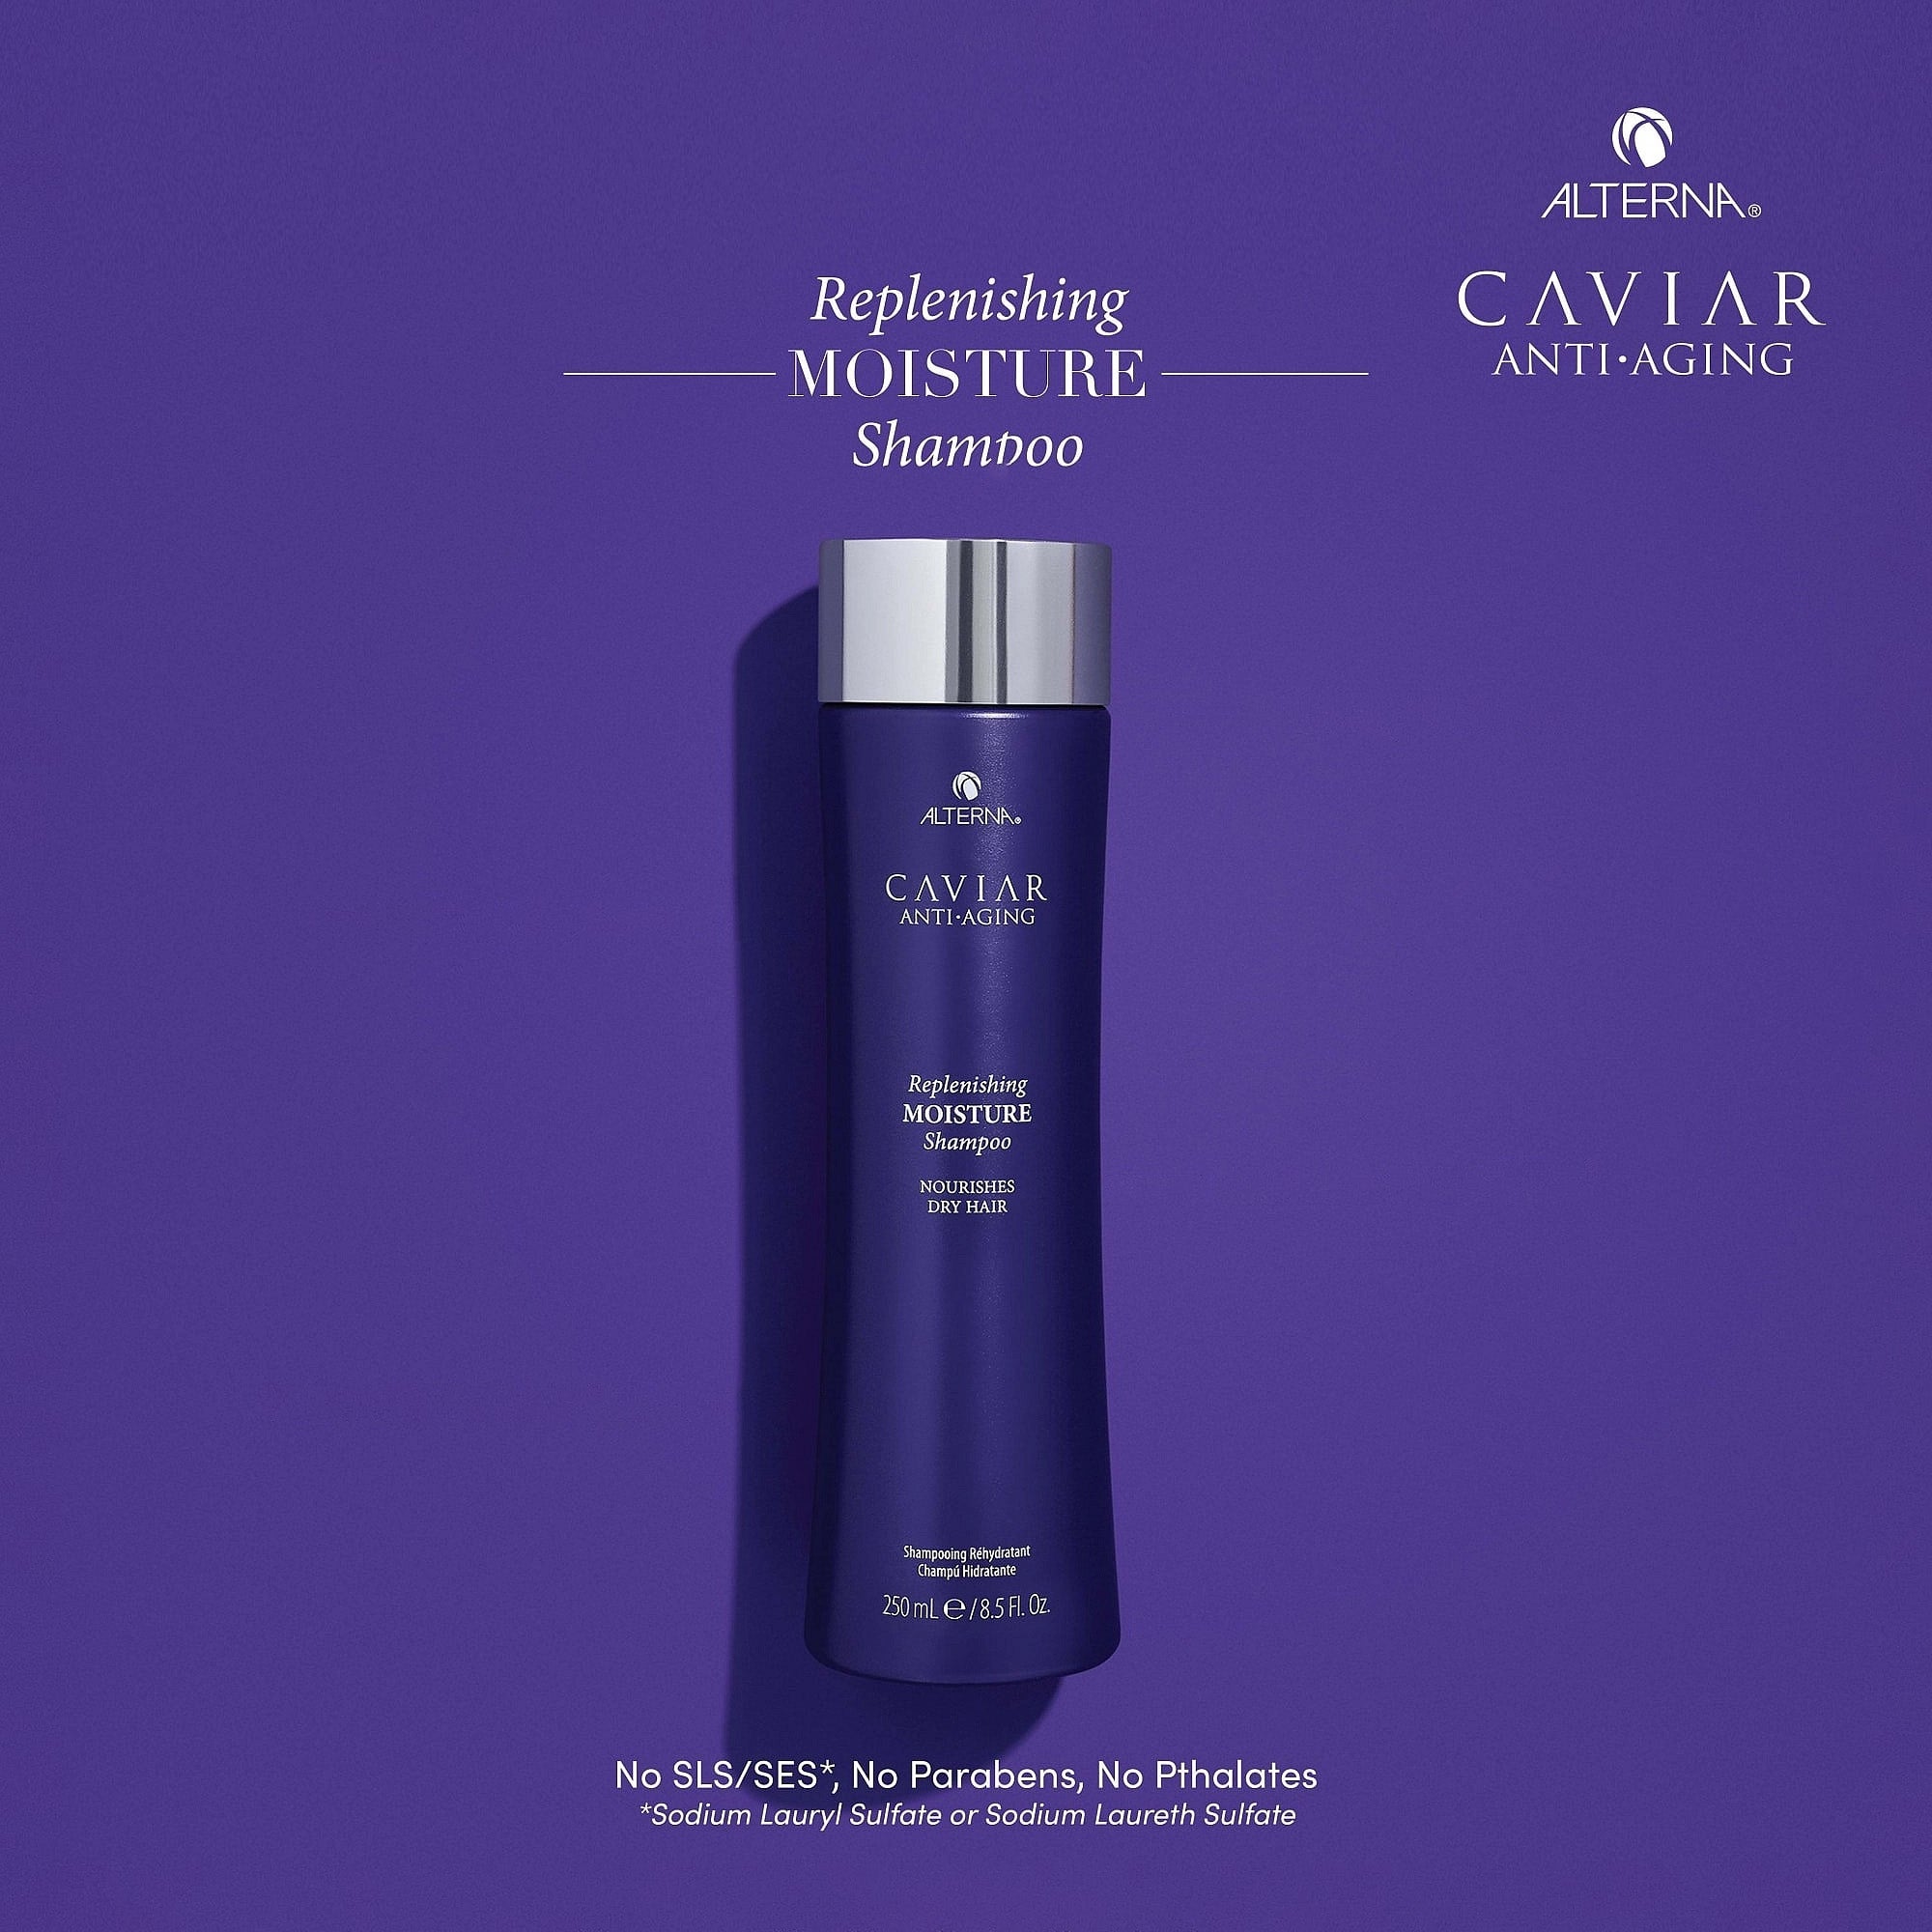 Alterna Caviar Anti-Aging Replenishing Moisture Shampoo / 8.5